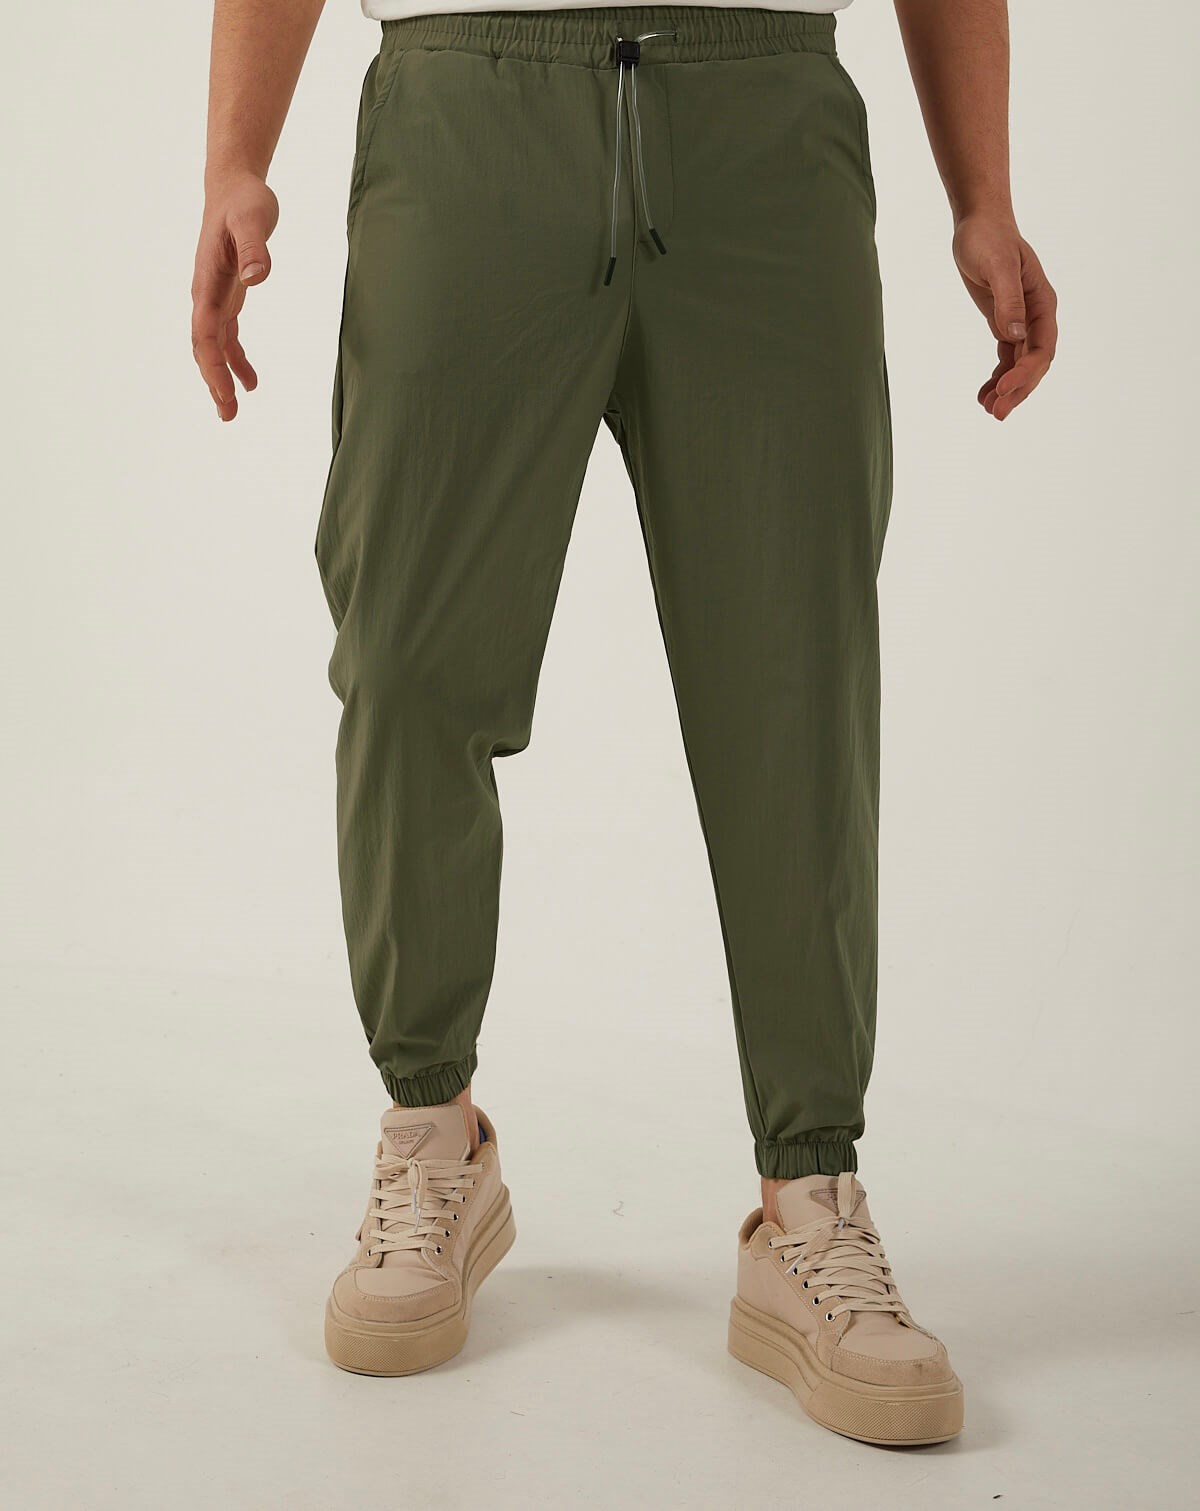 Koyu Yeşil Renk Paraşüt Kumaş Jogger Erkek Pantolon - Pobudo.com